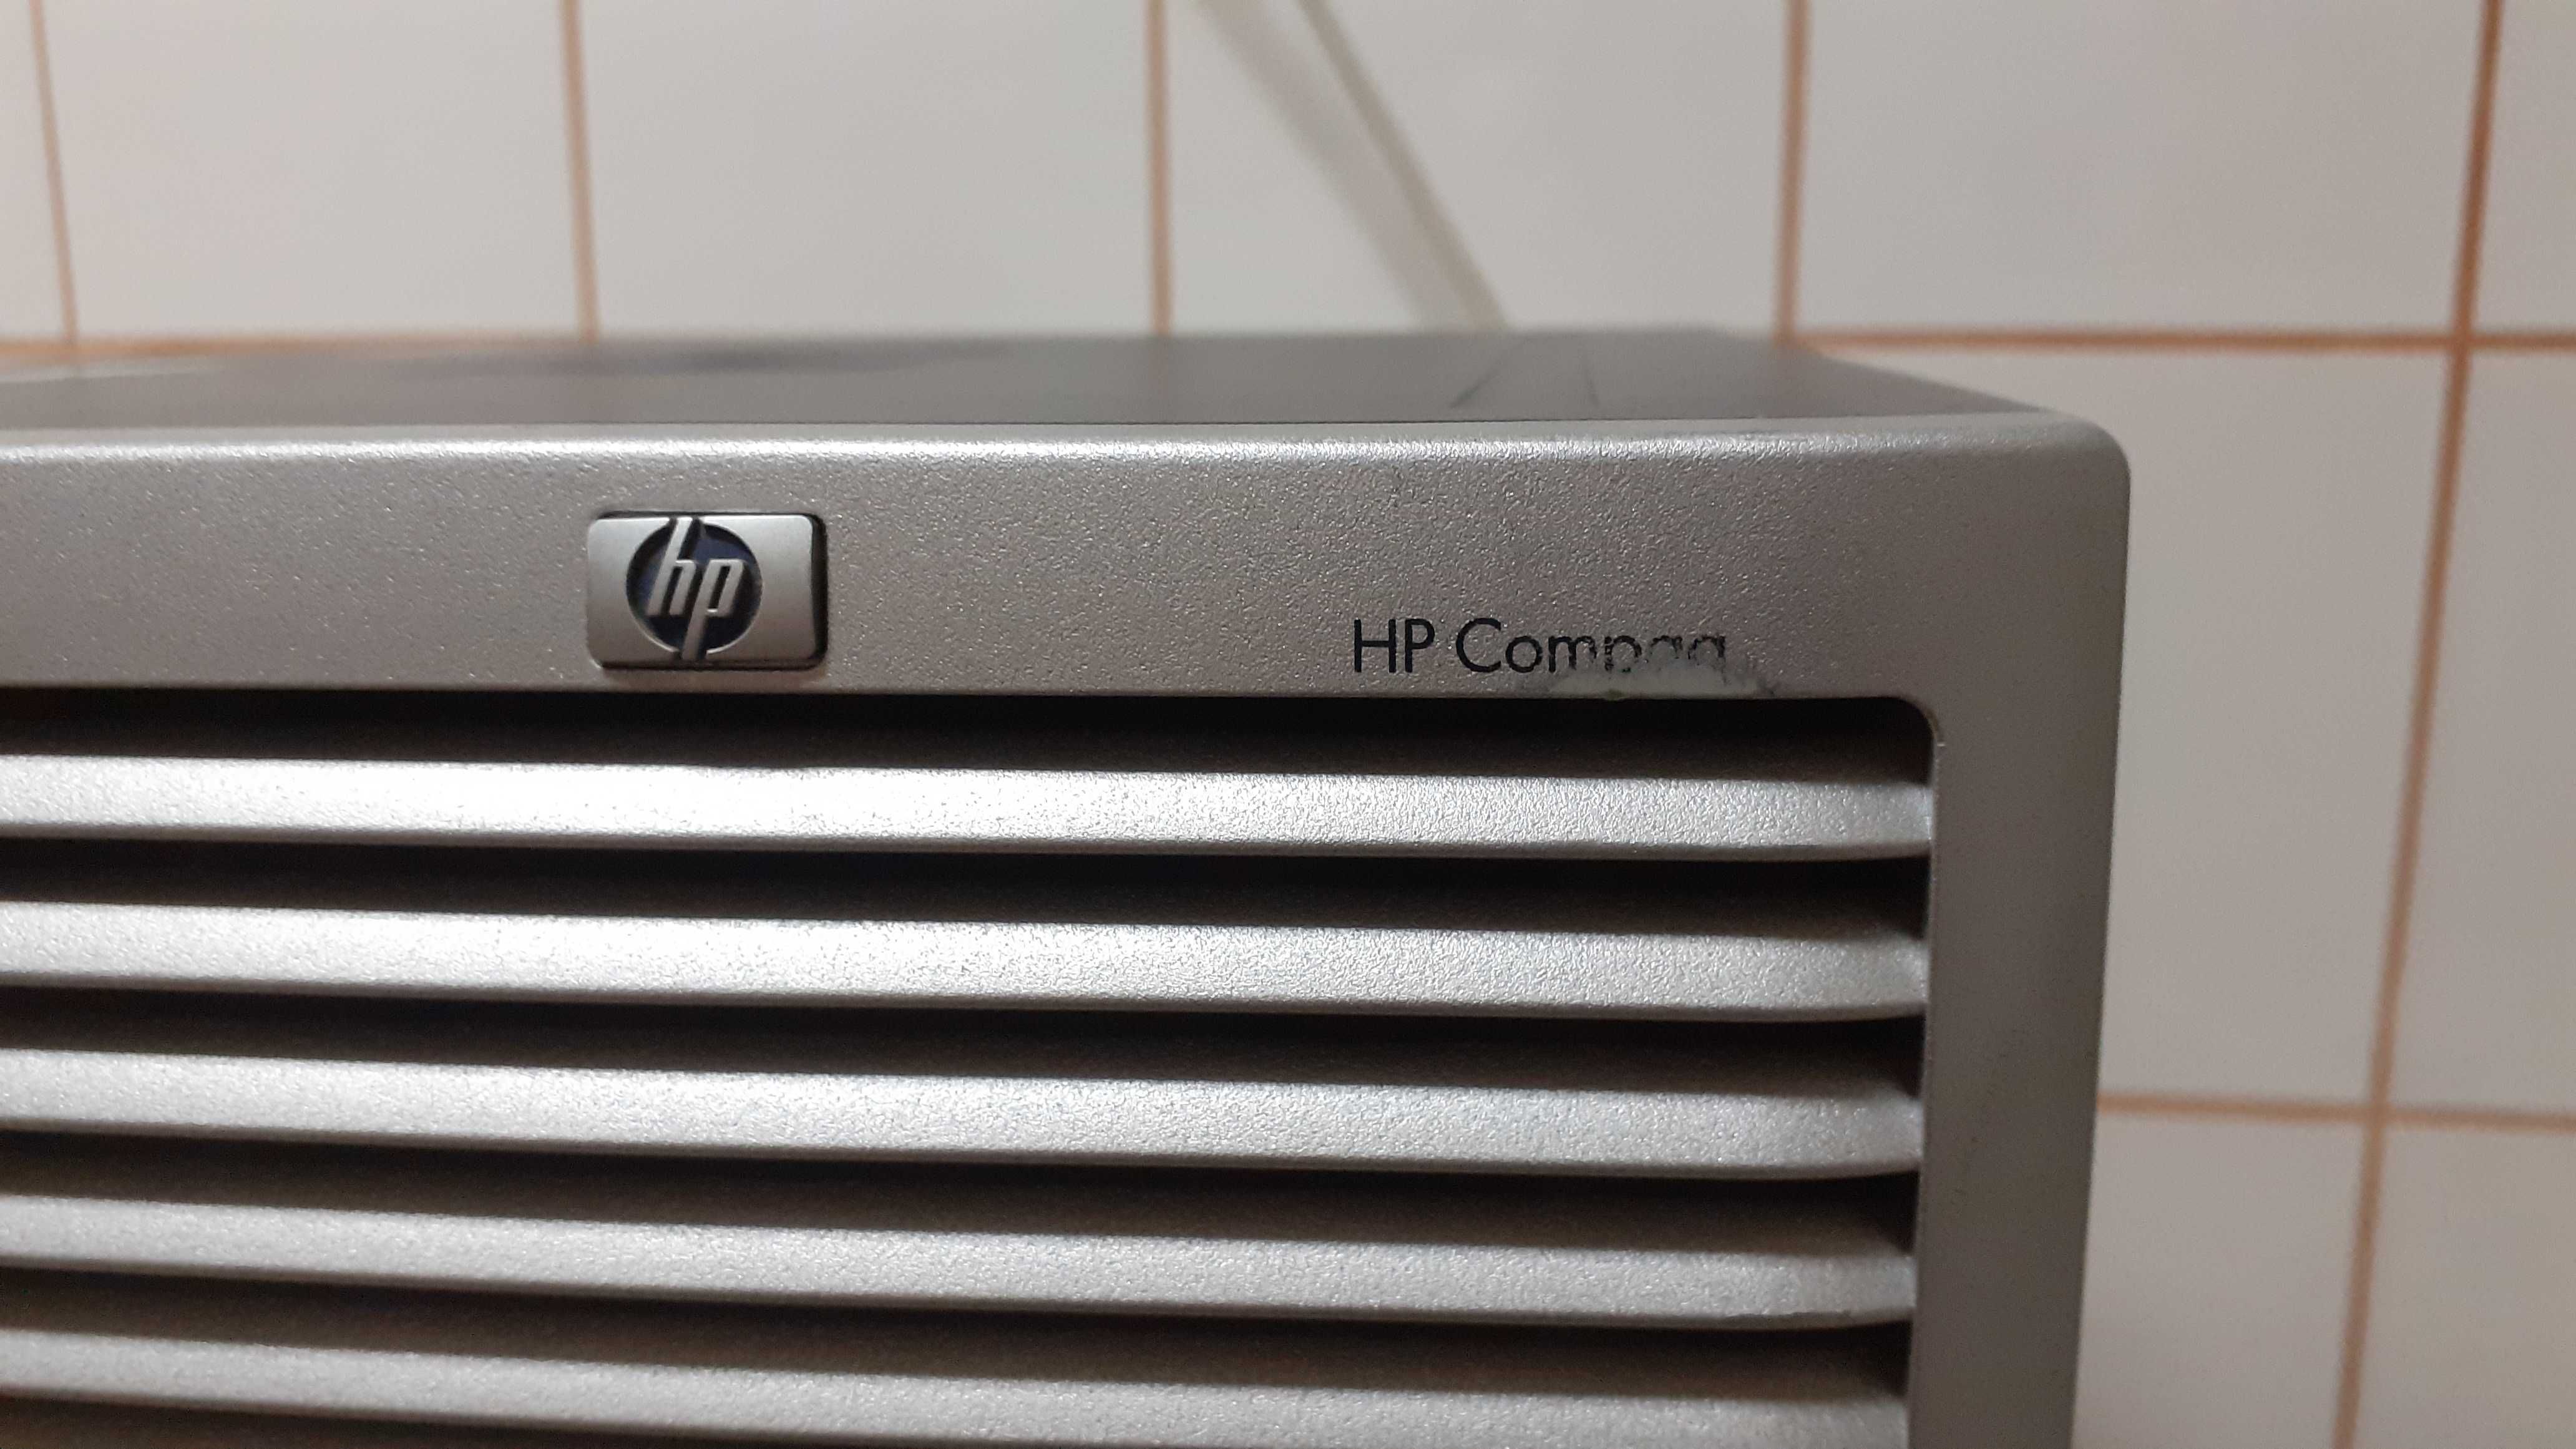 PC / sistem complet HP Compaq dc7600 SFF - UPGRADE